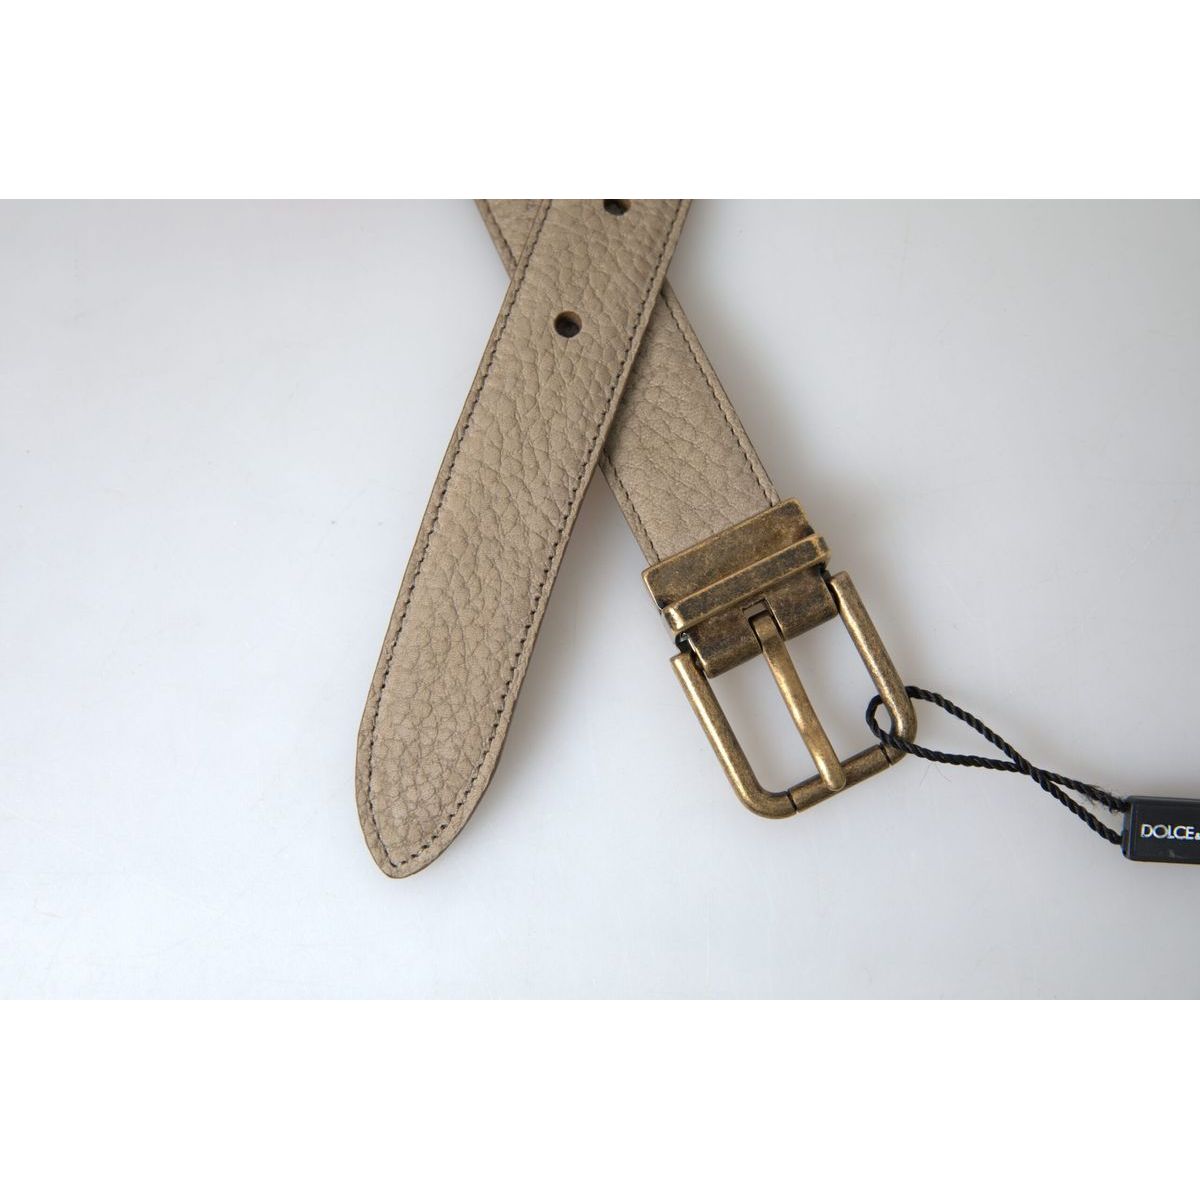 Dolce & Gabbana Elegant Beige Leather Belt with Metal Buckle beige-leather-gold-metal-buckle-men-belt 465A5285-scaled-4f1f4589-2c7.jpg